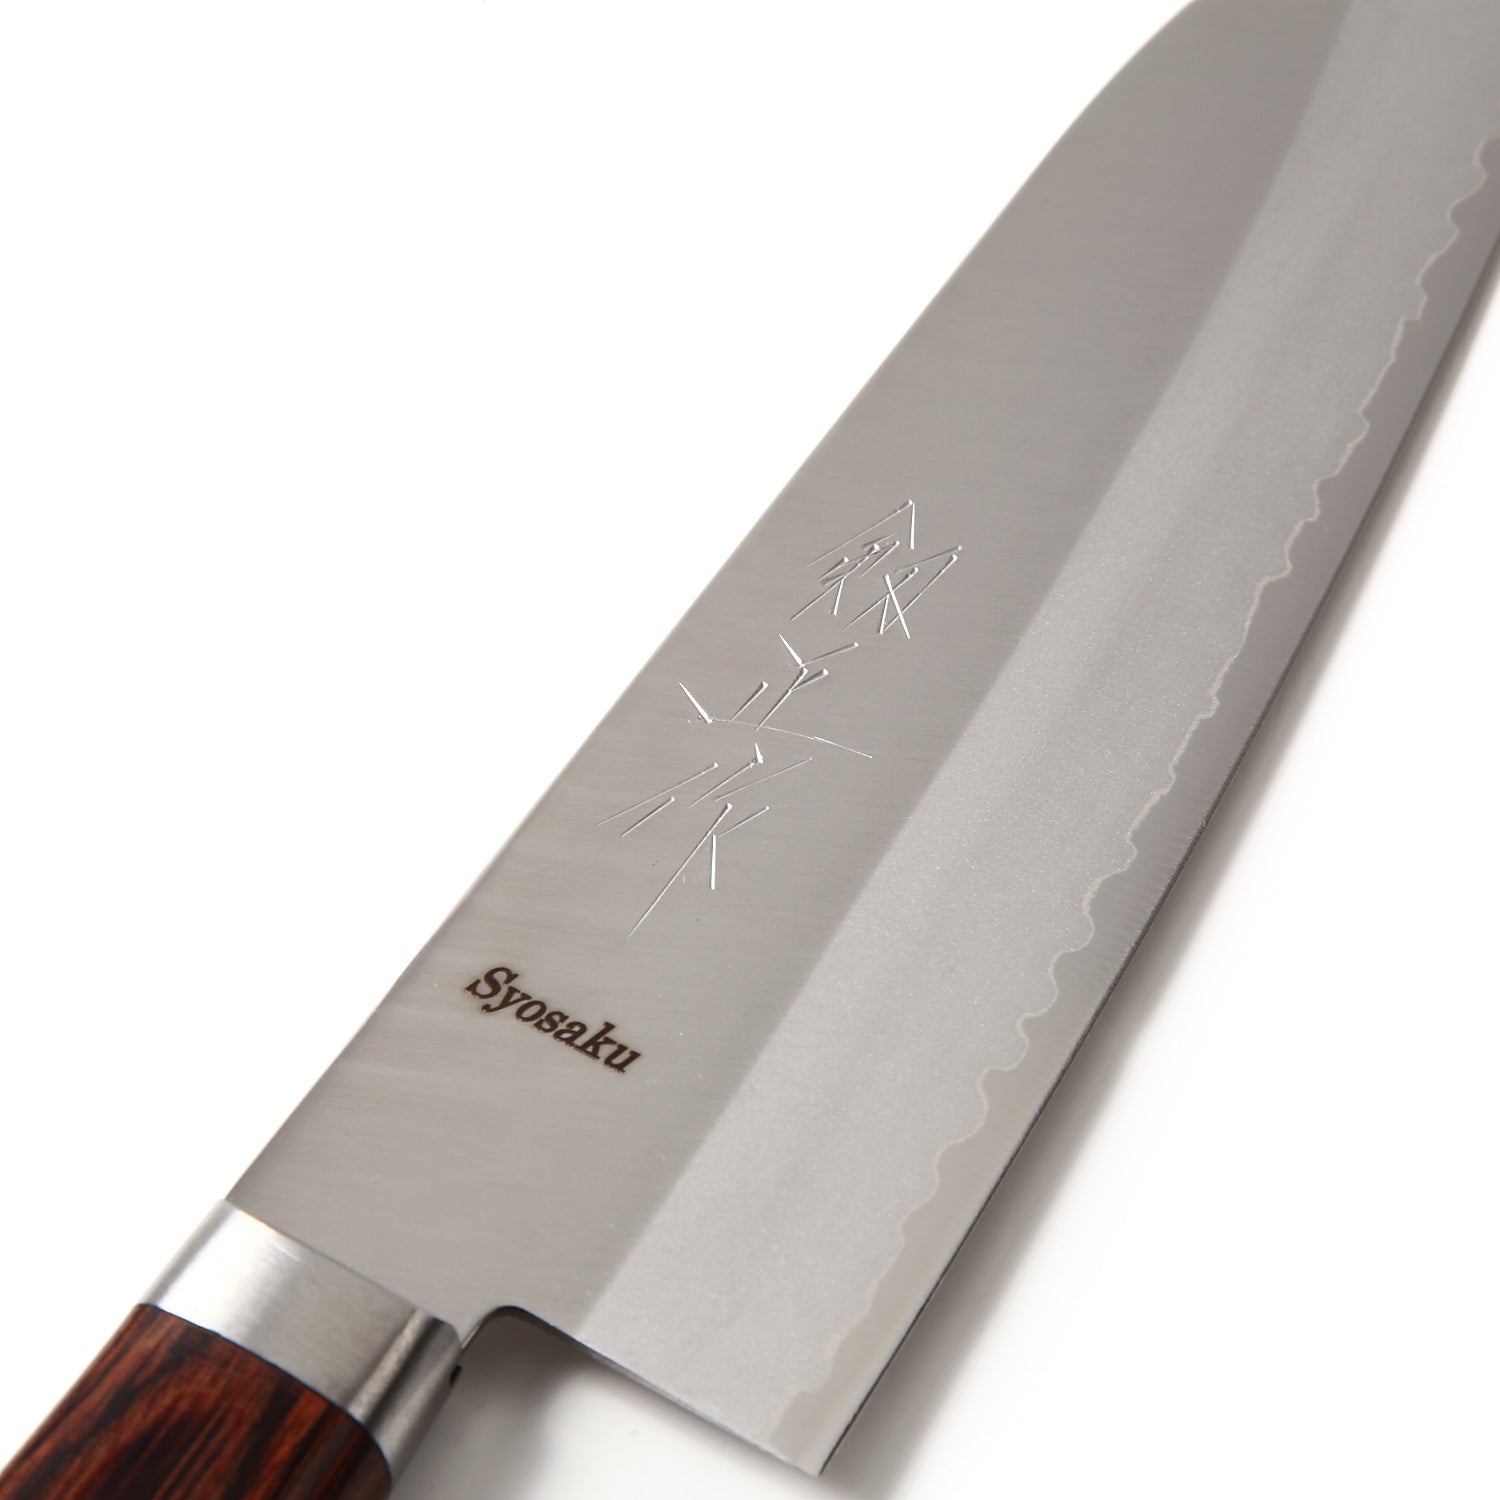 SAKUTO (作東) Japanese Damascus Steel Kitchen Knife Set With Blue Handle, Sakuto Knives